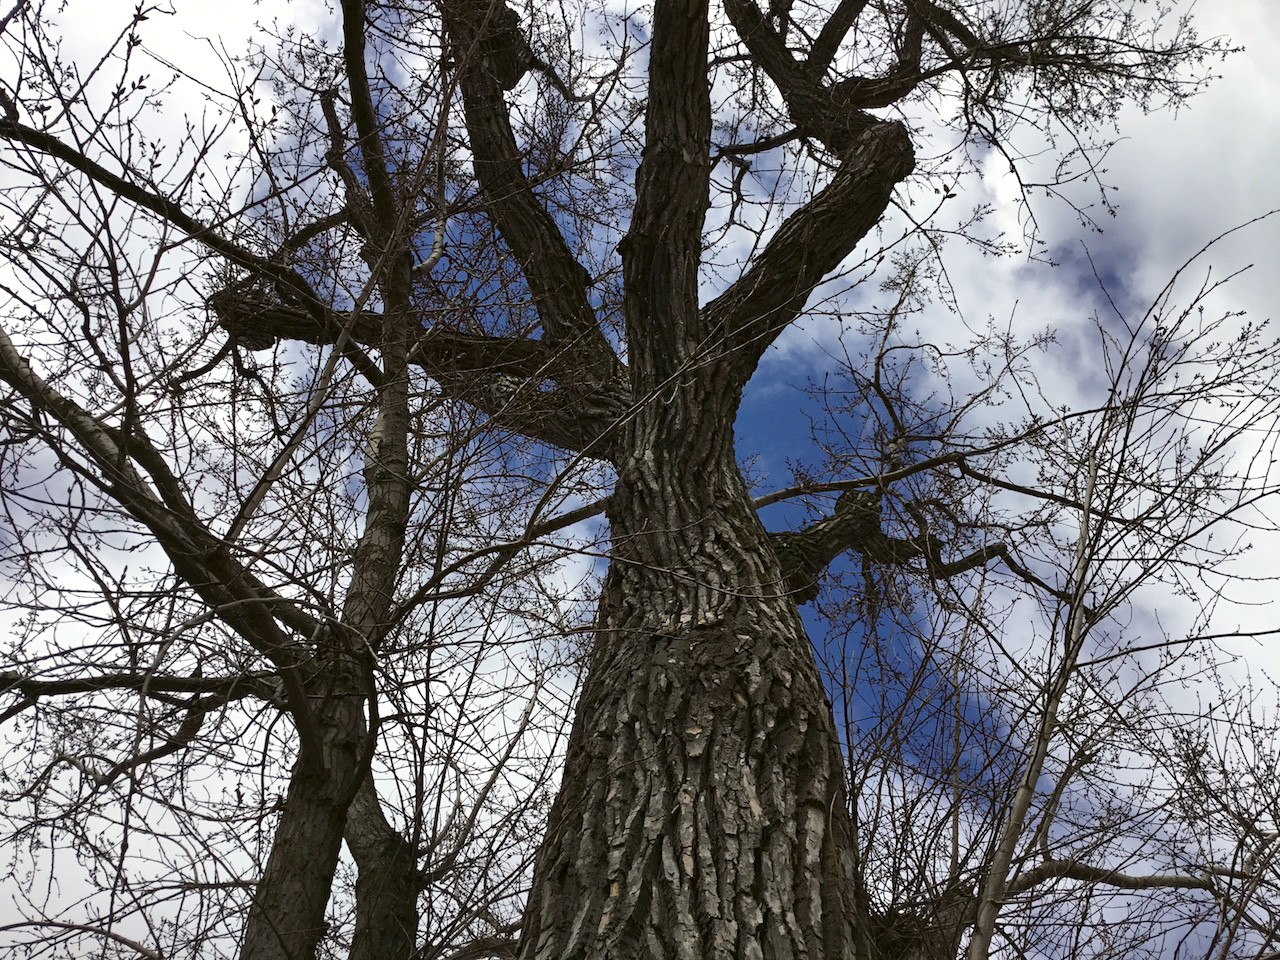 School-wide bondar challenge winner 2018-19 tree trunk and branches against sky